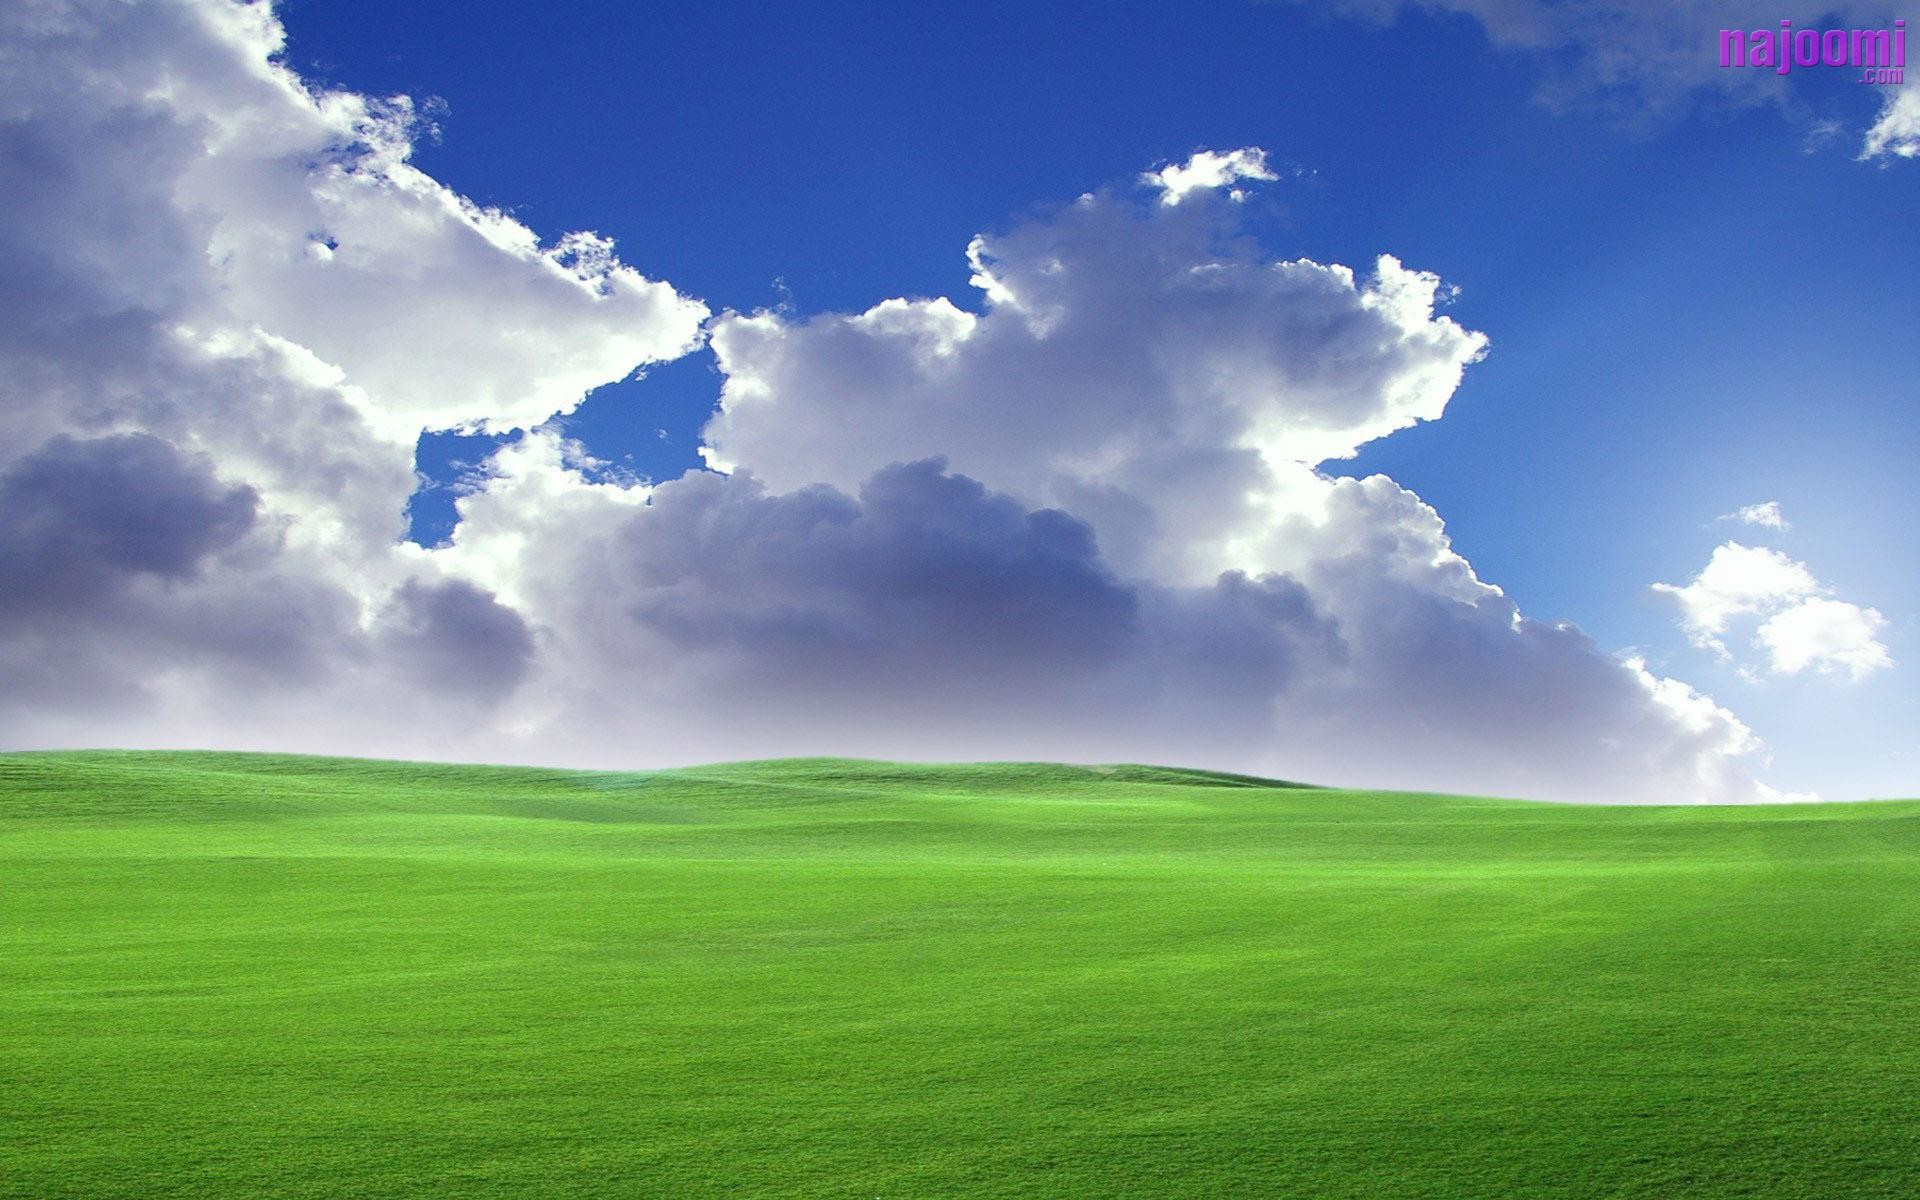 Windows Xp Desktop Background Image